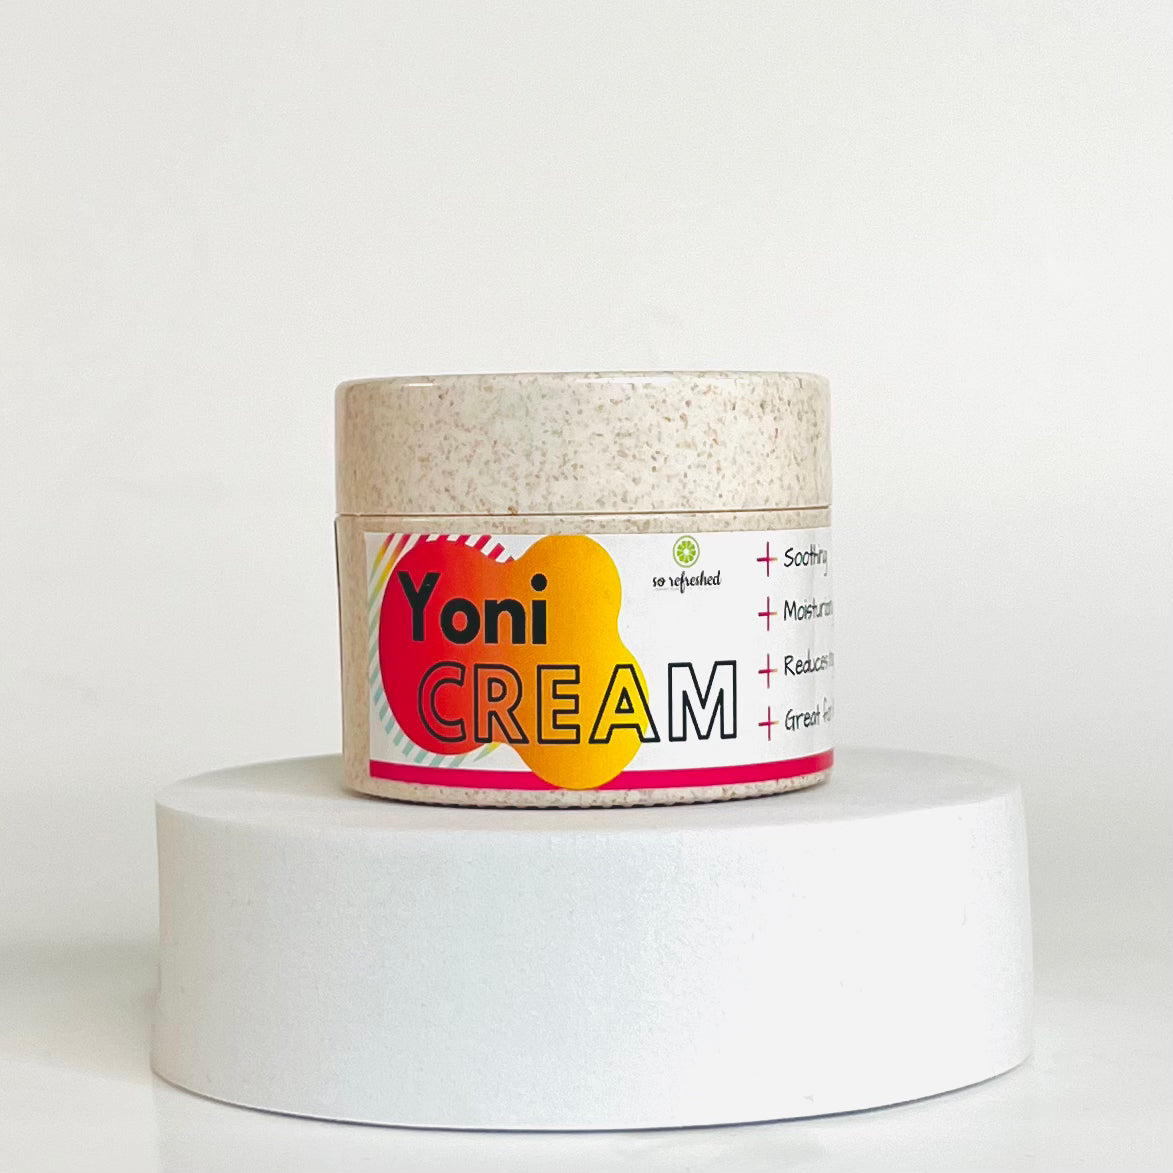 Yoni Cream